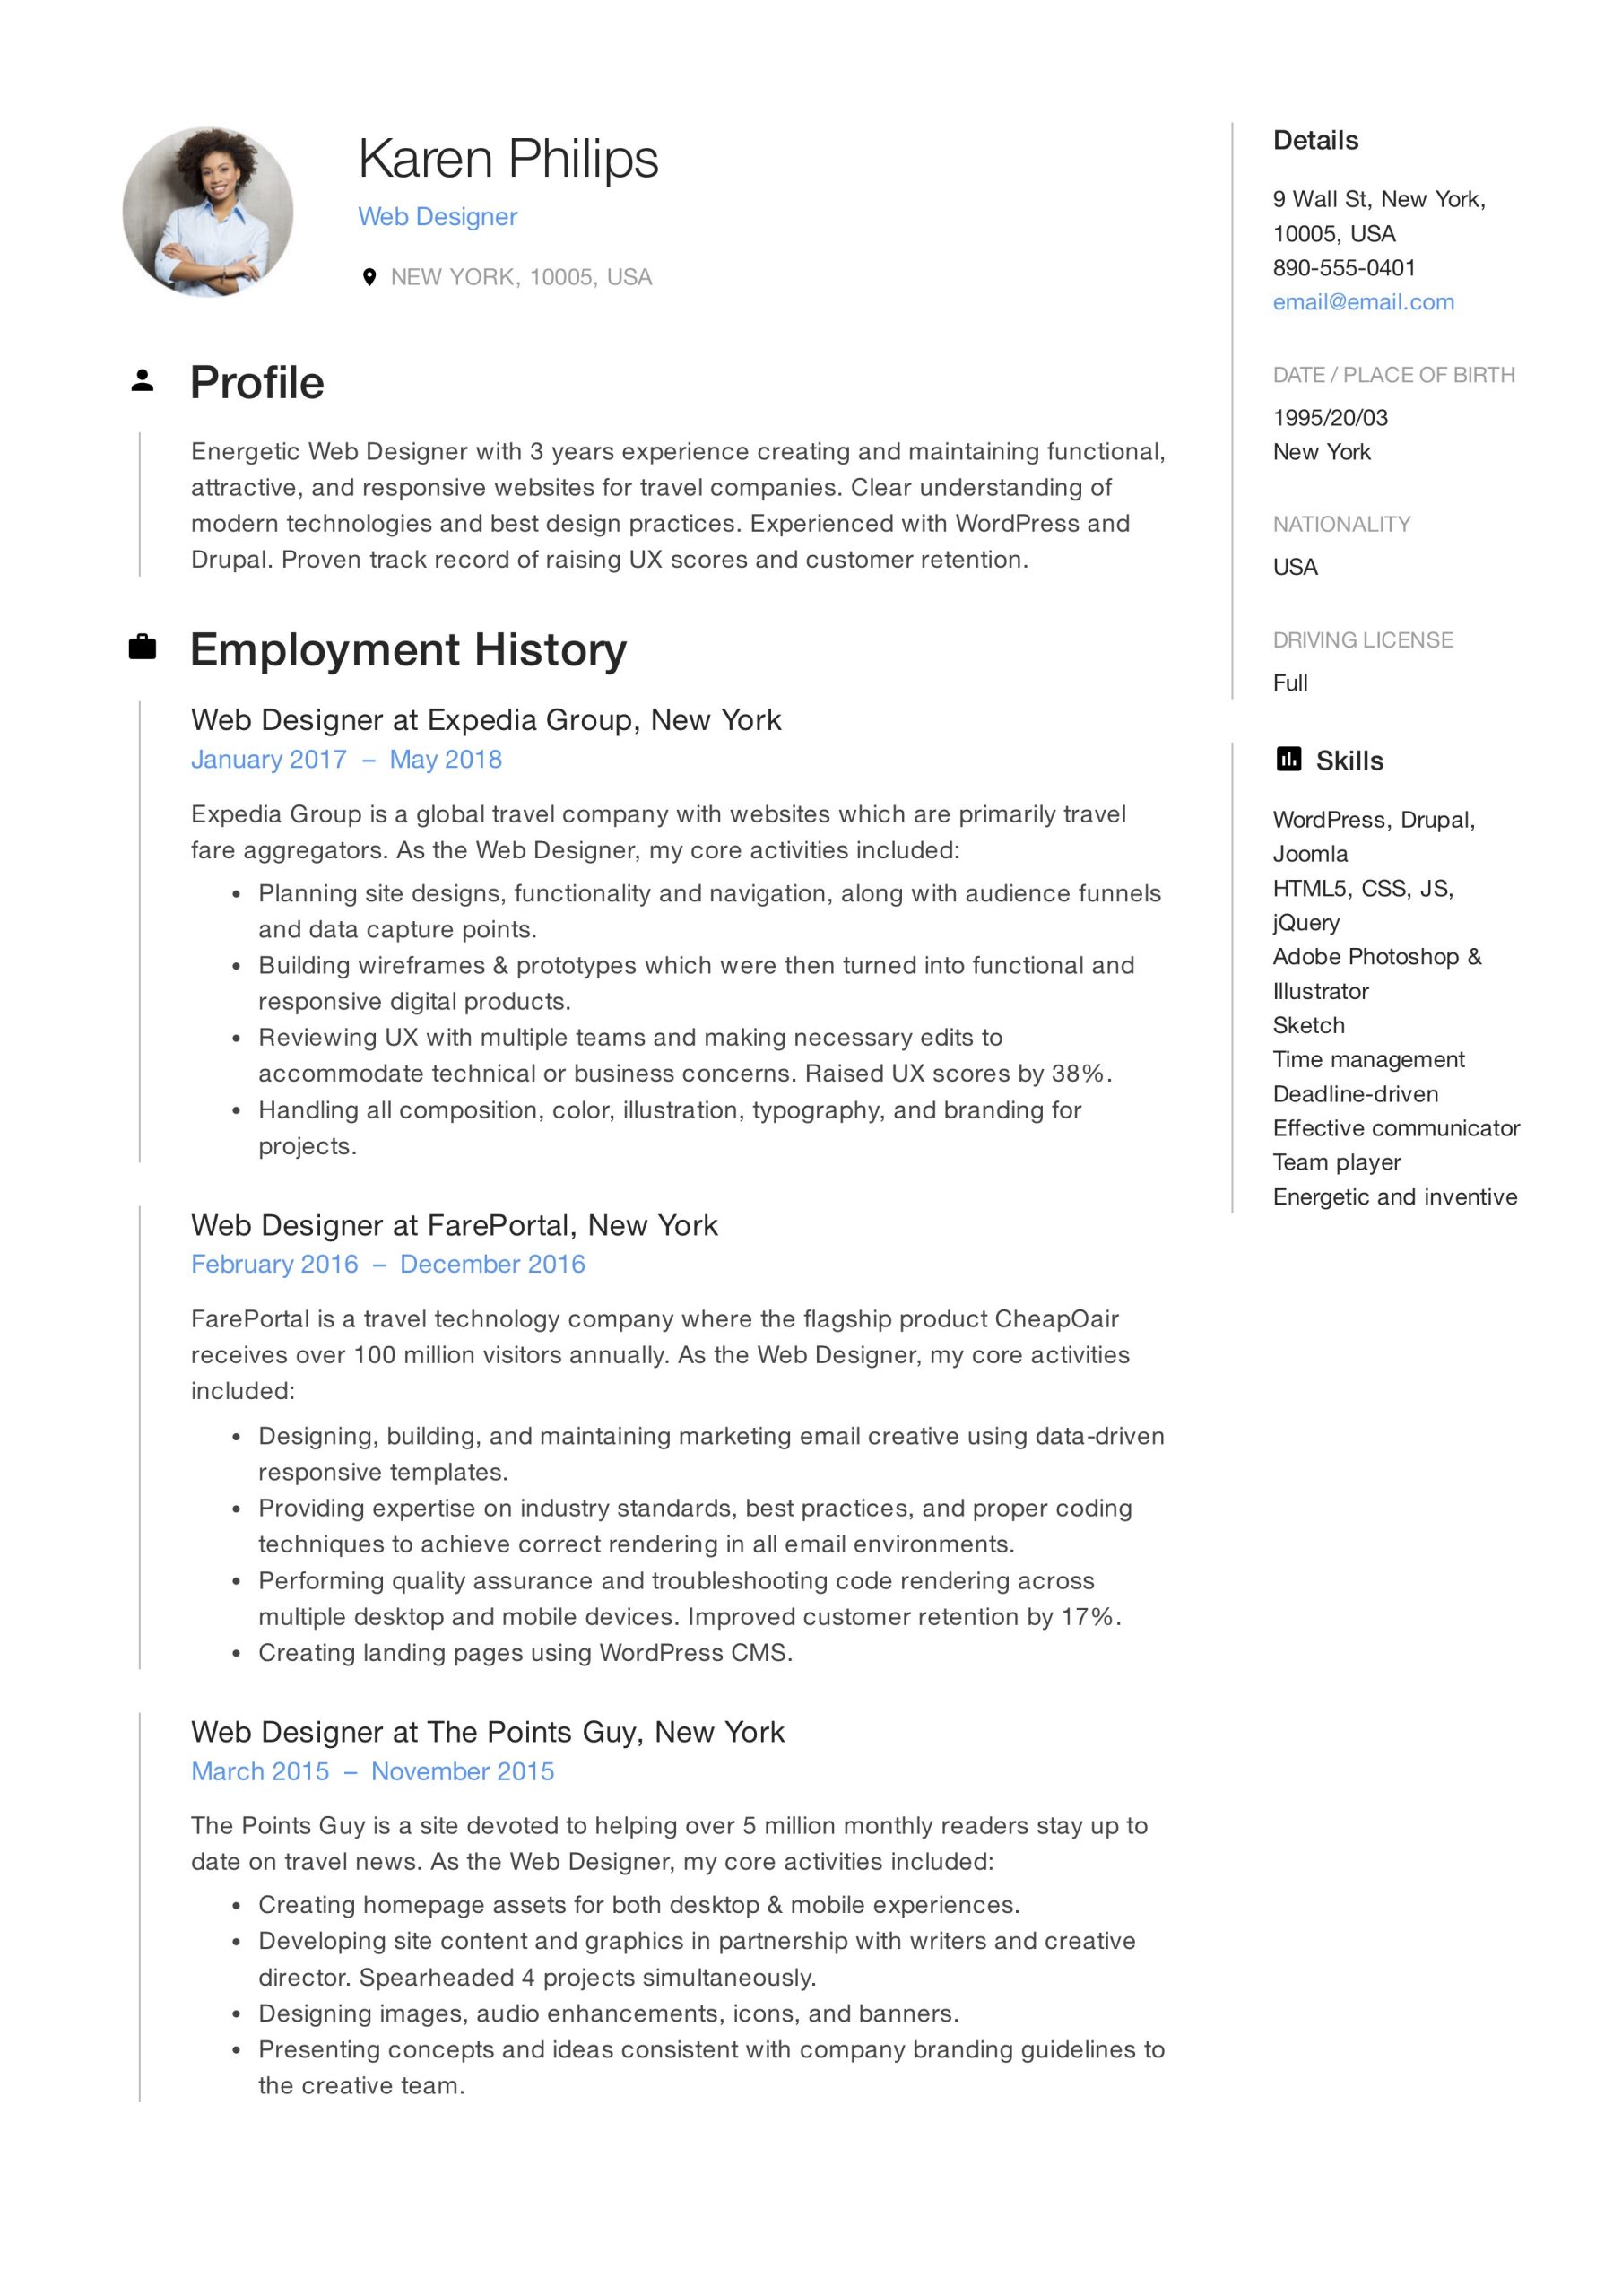 Sample Resume Objective for Web Developer 19 Free Web Designer Resume Examples & Guide Pdf 2020